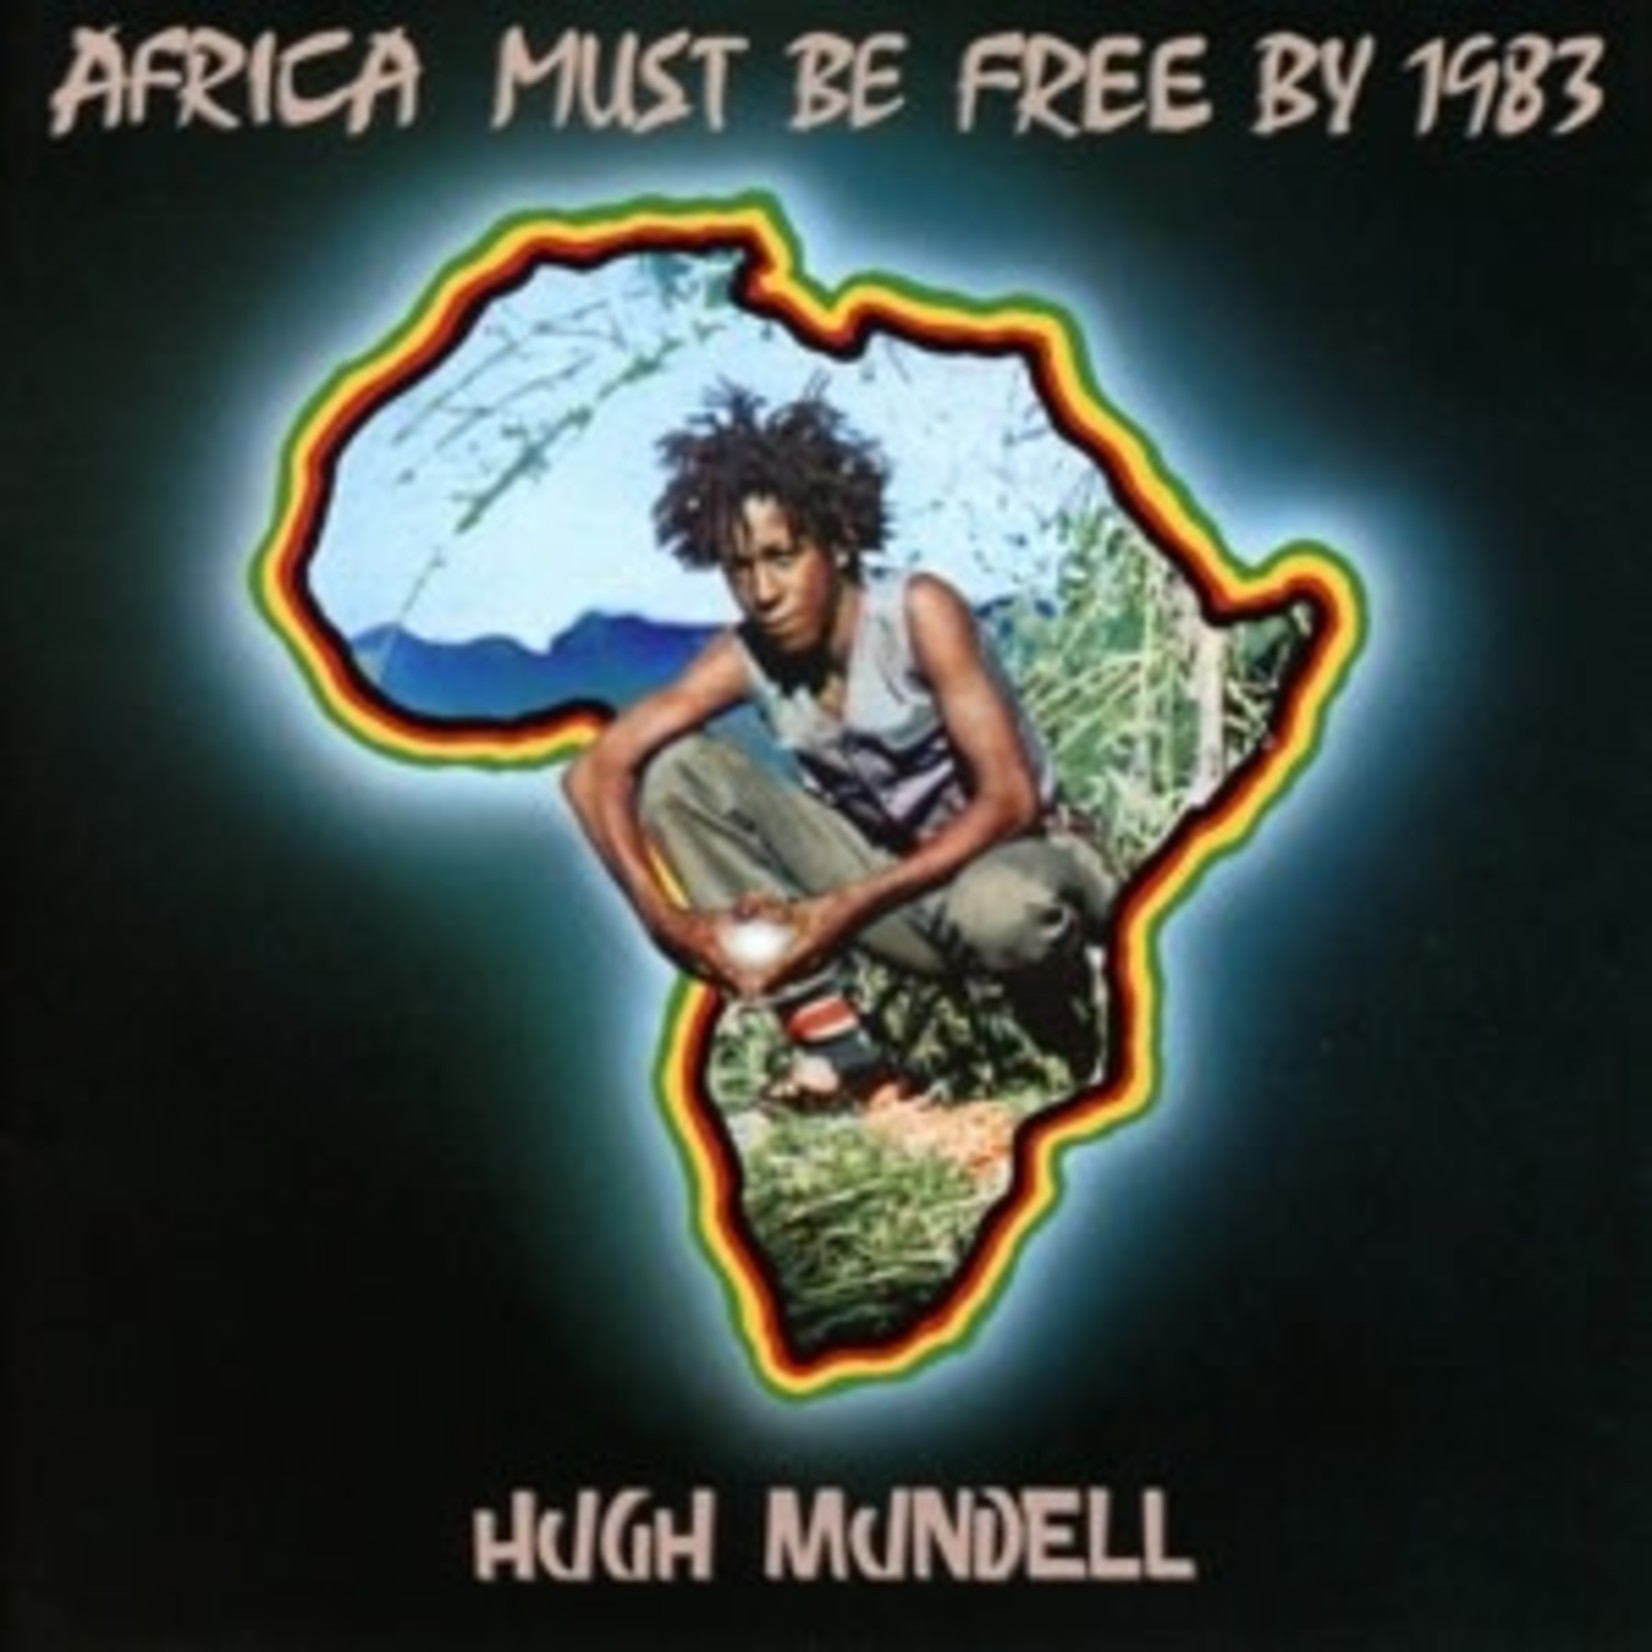 HUGH MUNDELL -  AFRICA MUST BE FREE BY 1983 (VINYL)